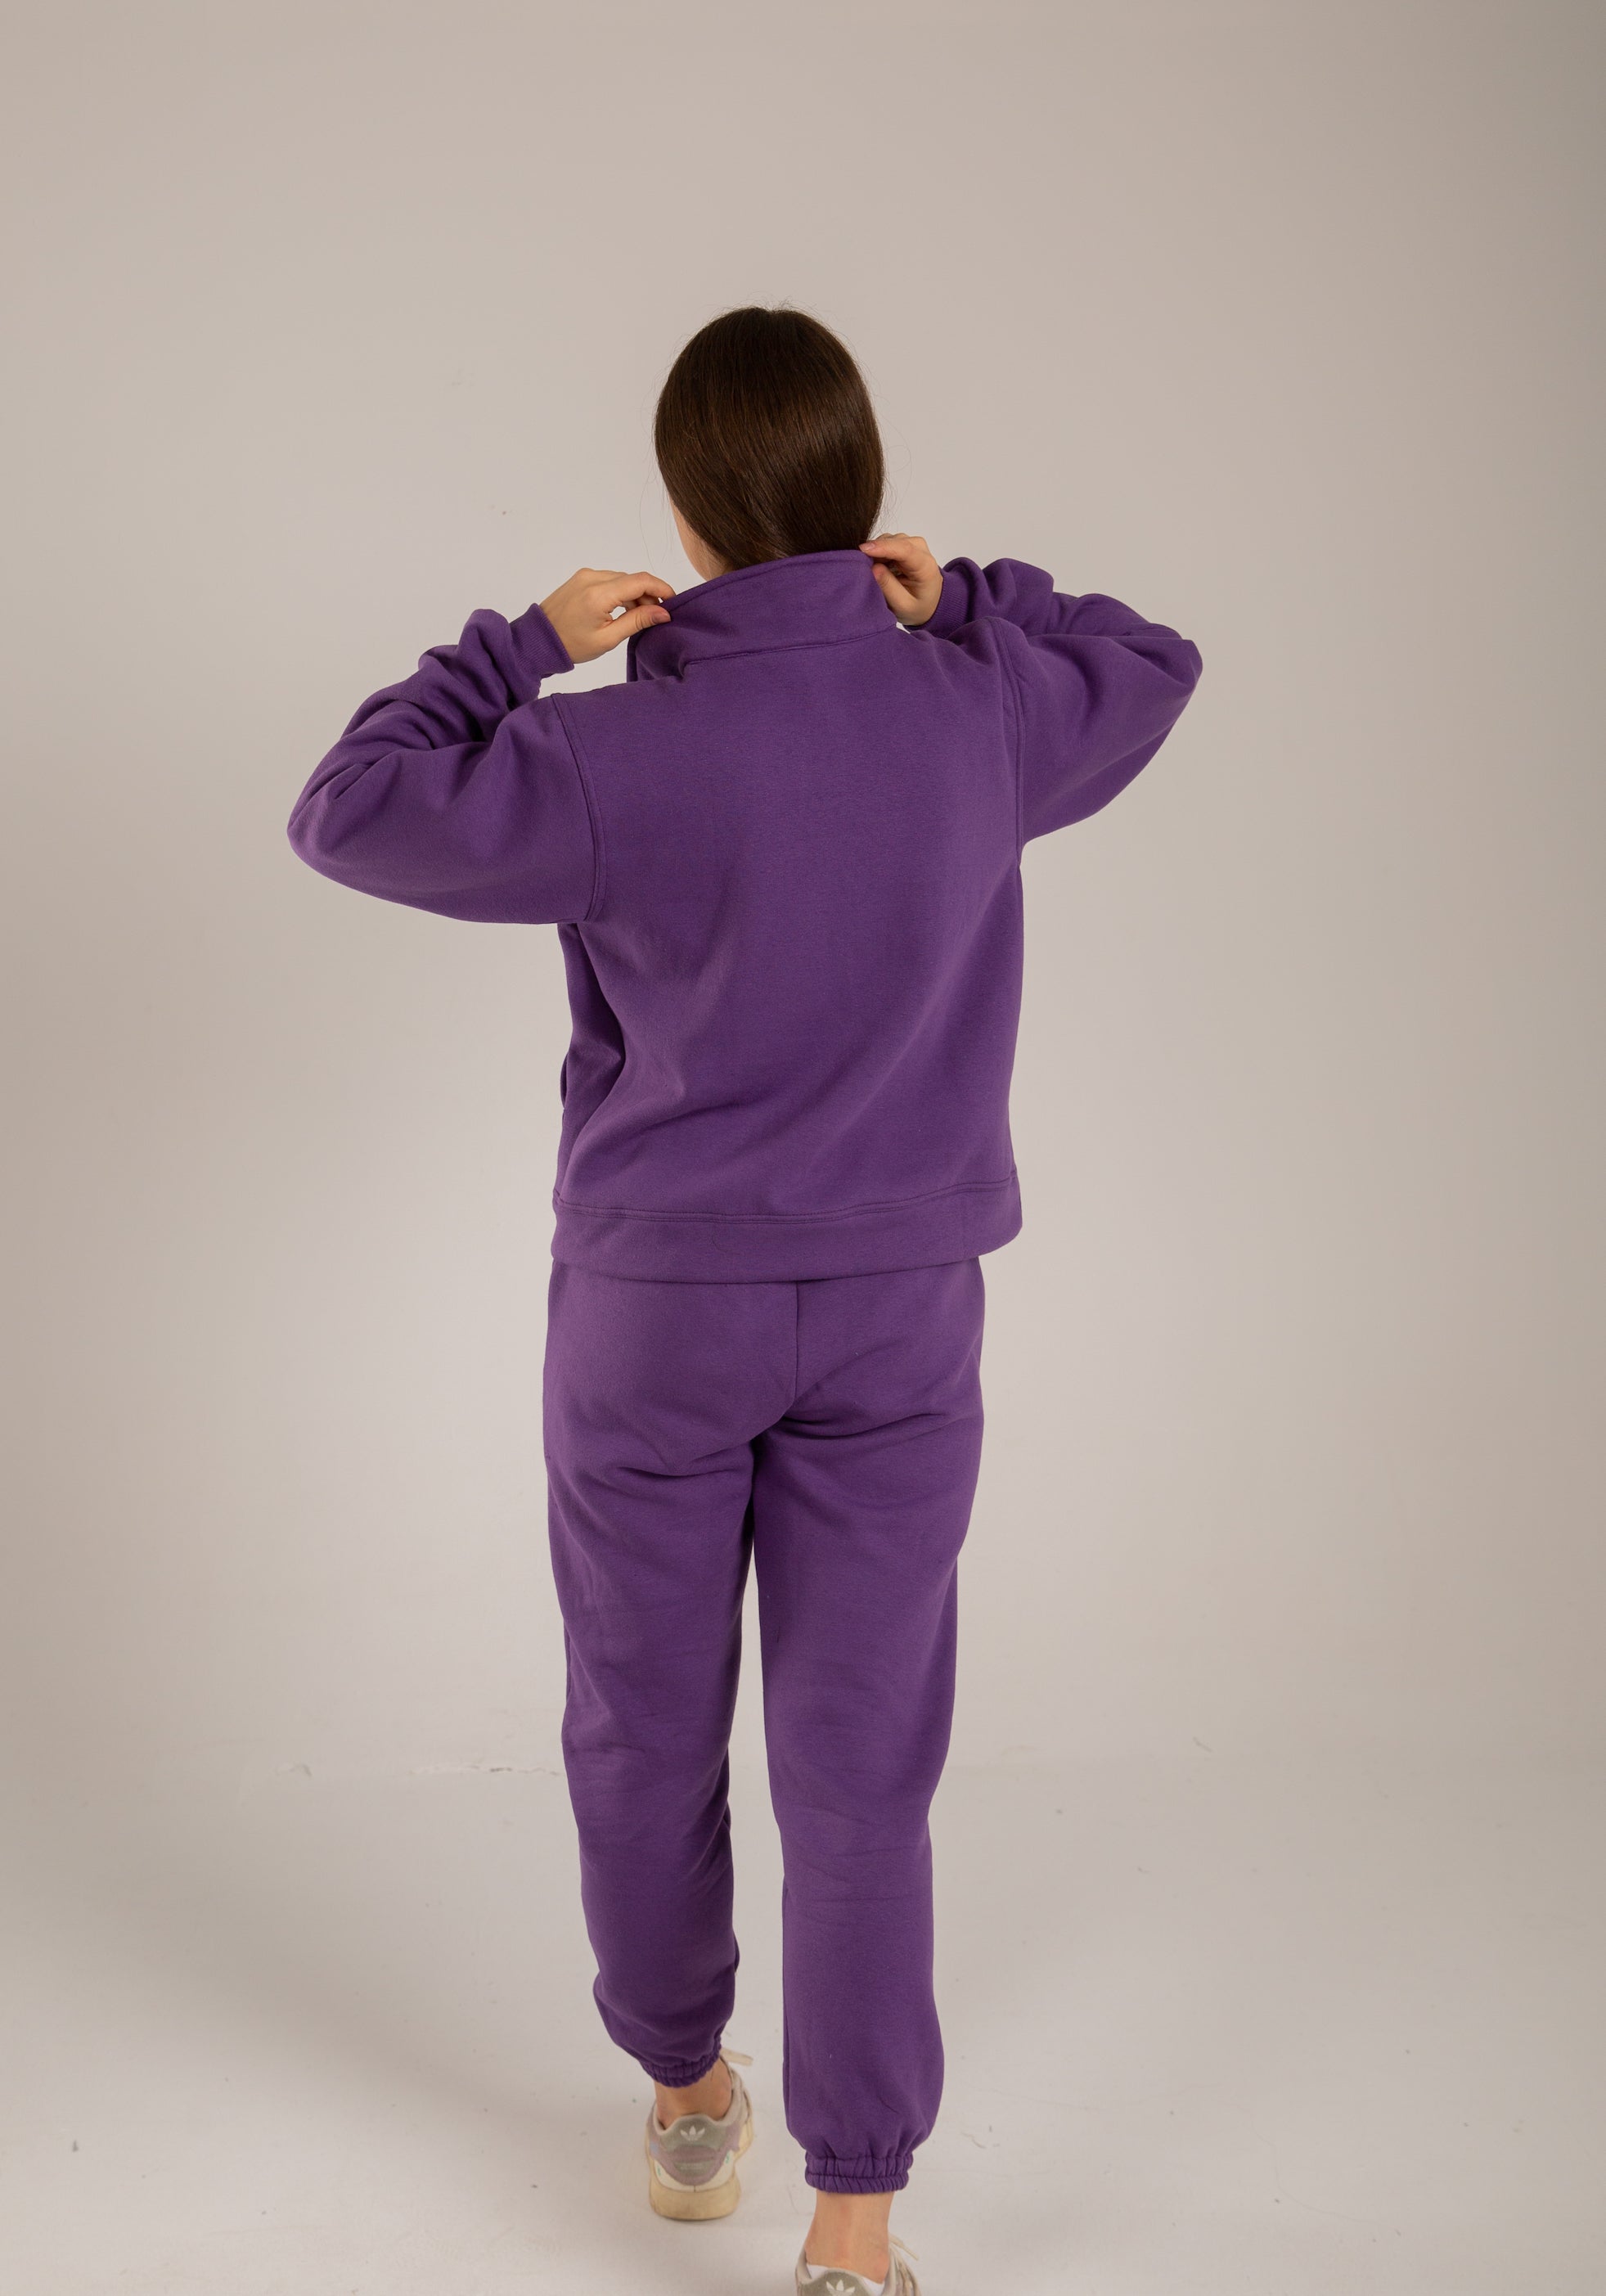 Snug set in purple (Sweatshirt + Bottom)